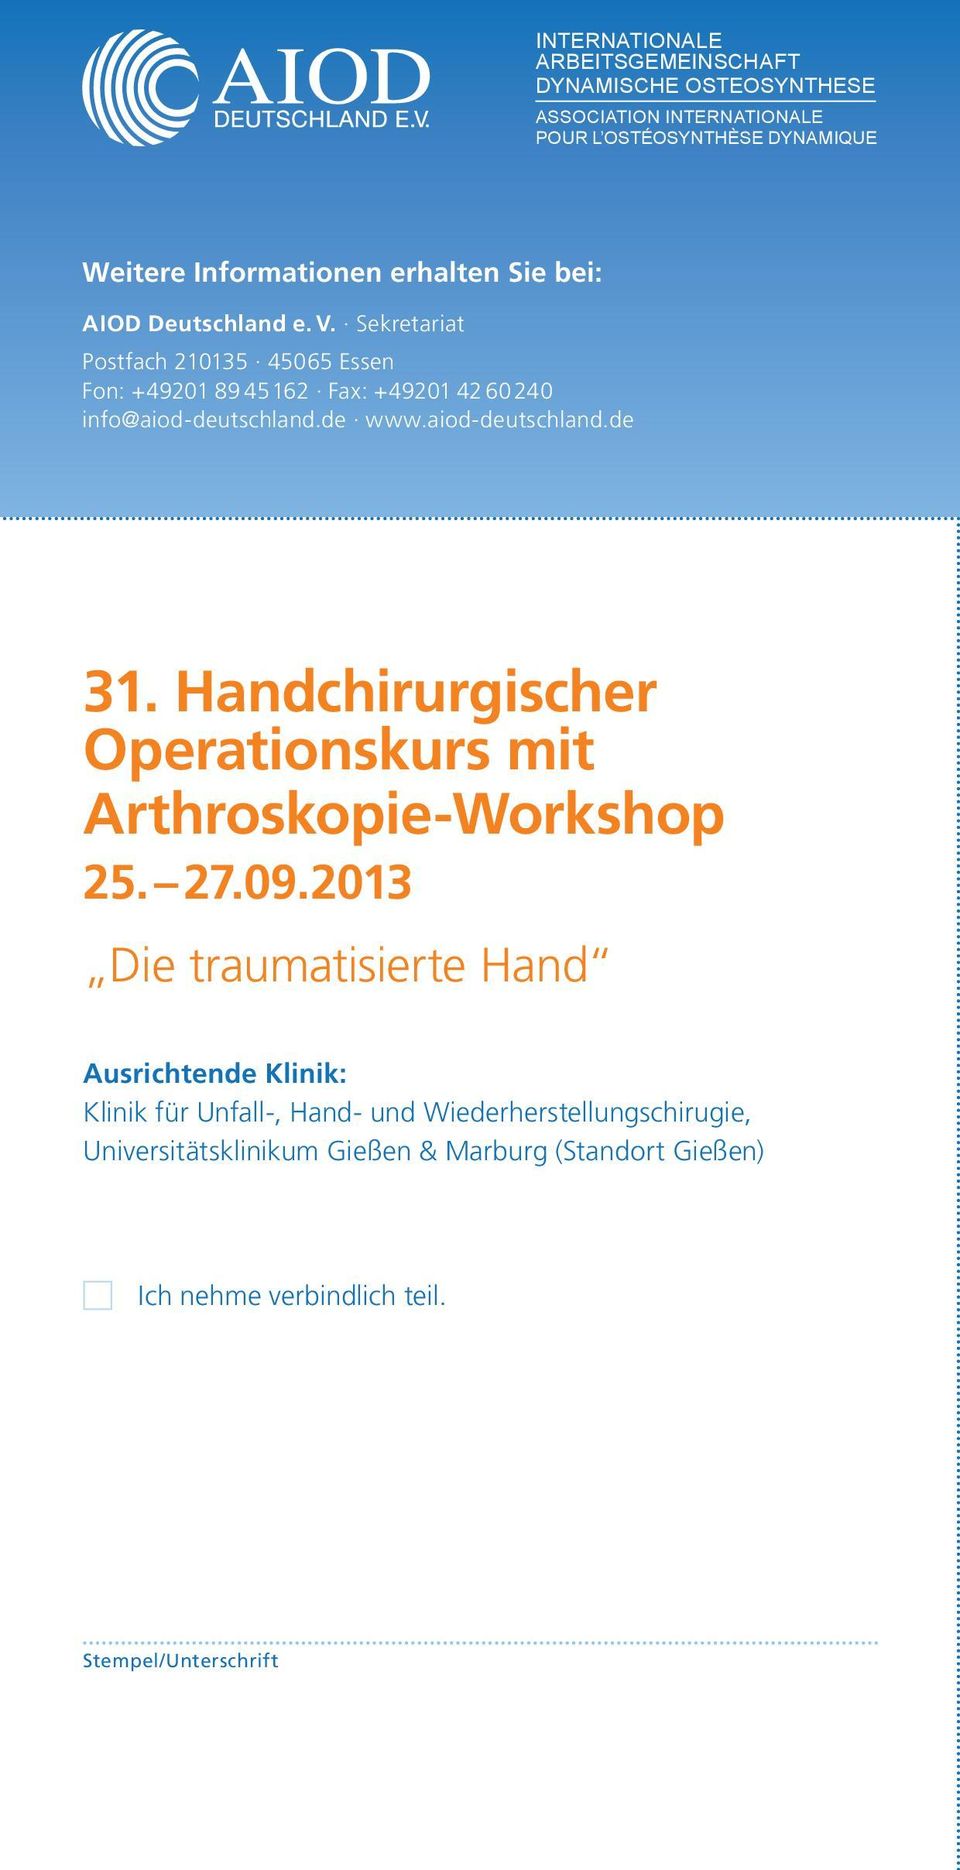 aiod-deutschland.de 31. Handchirurgischer Operationskurs mit Arthroskopie-Workshop 25. 27.09.